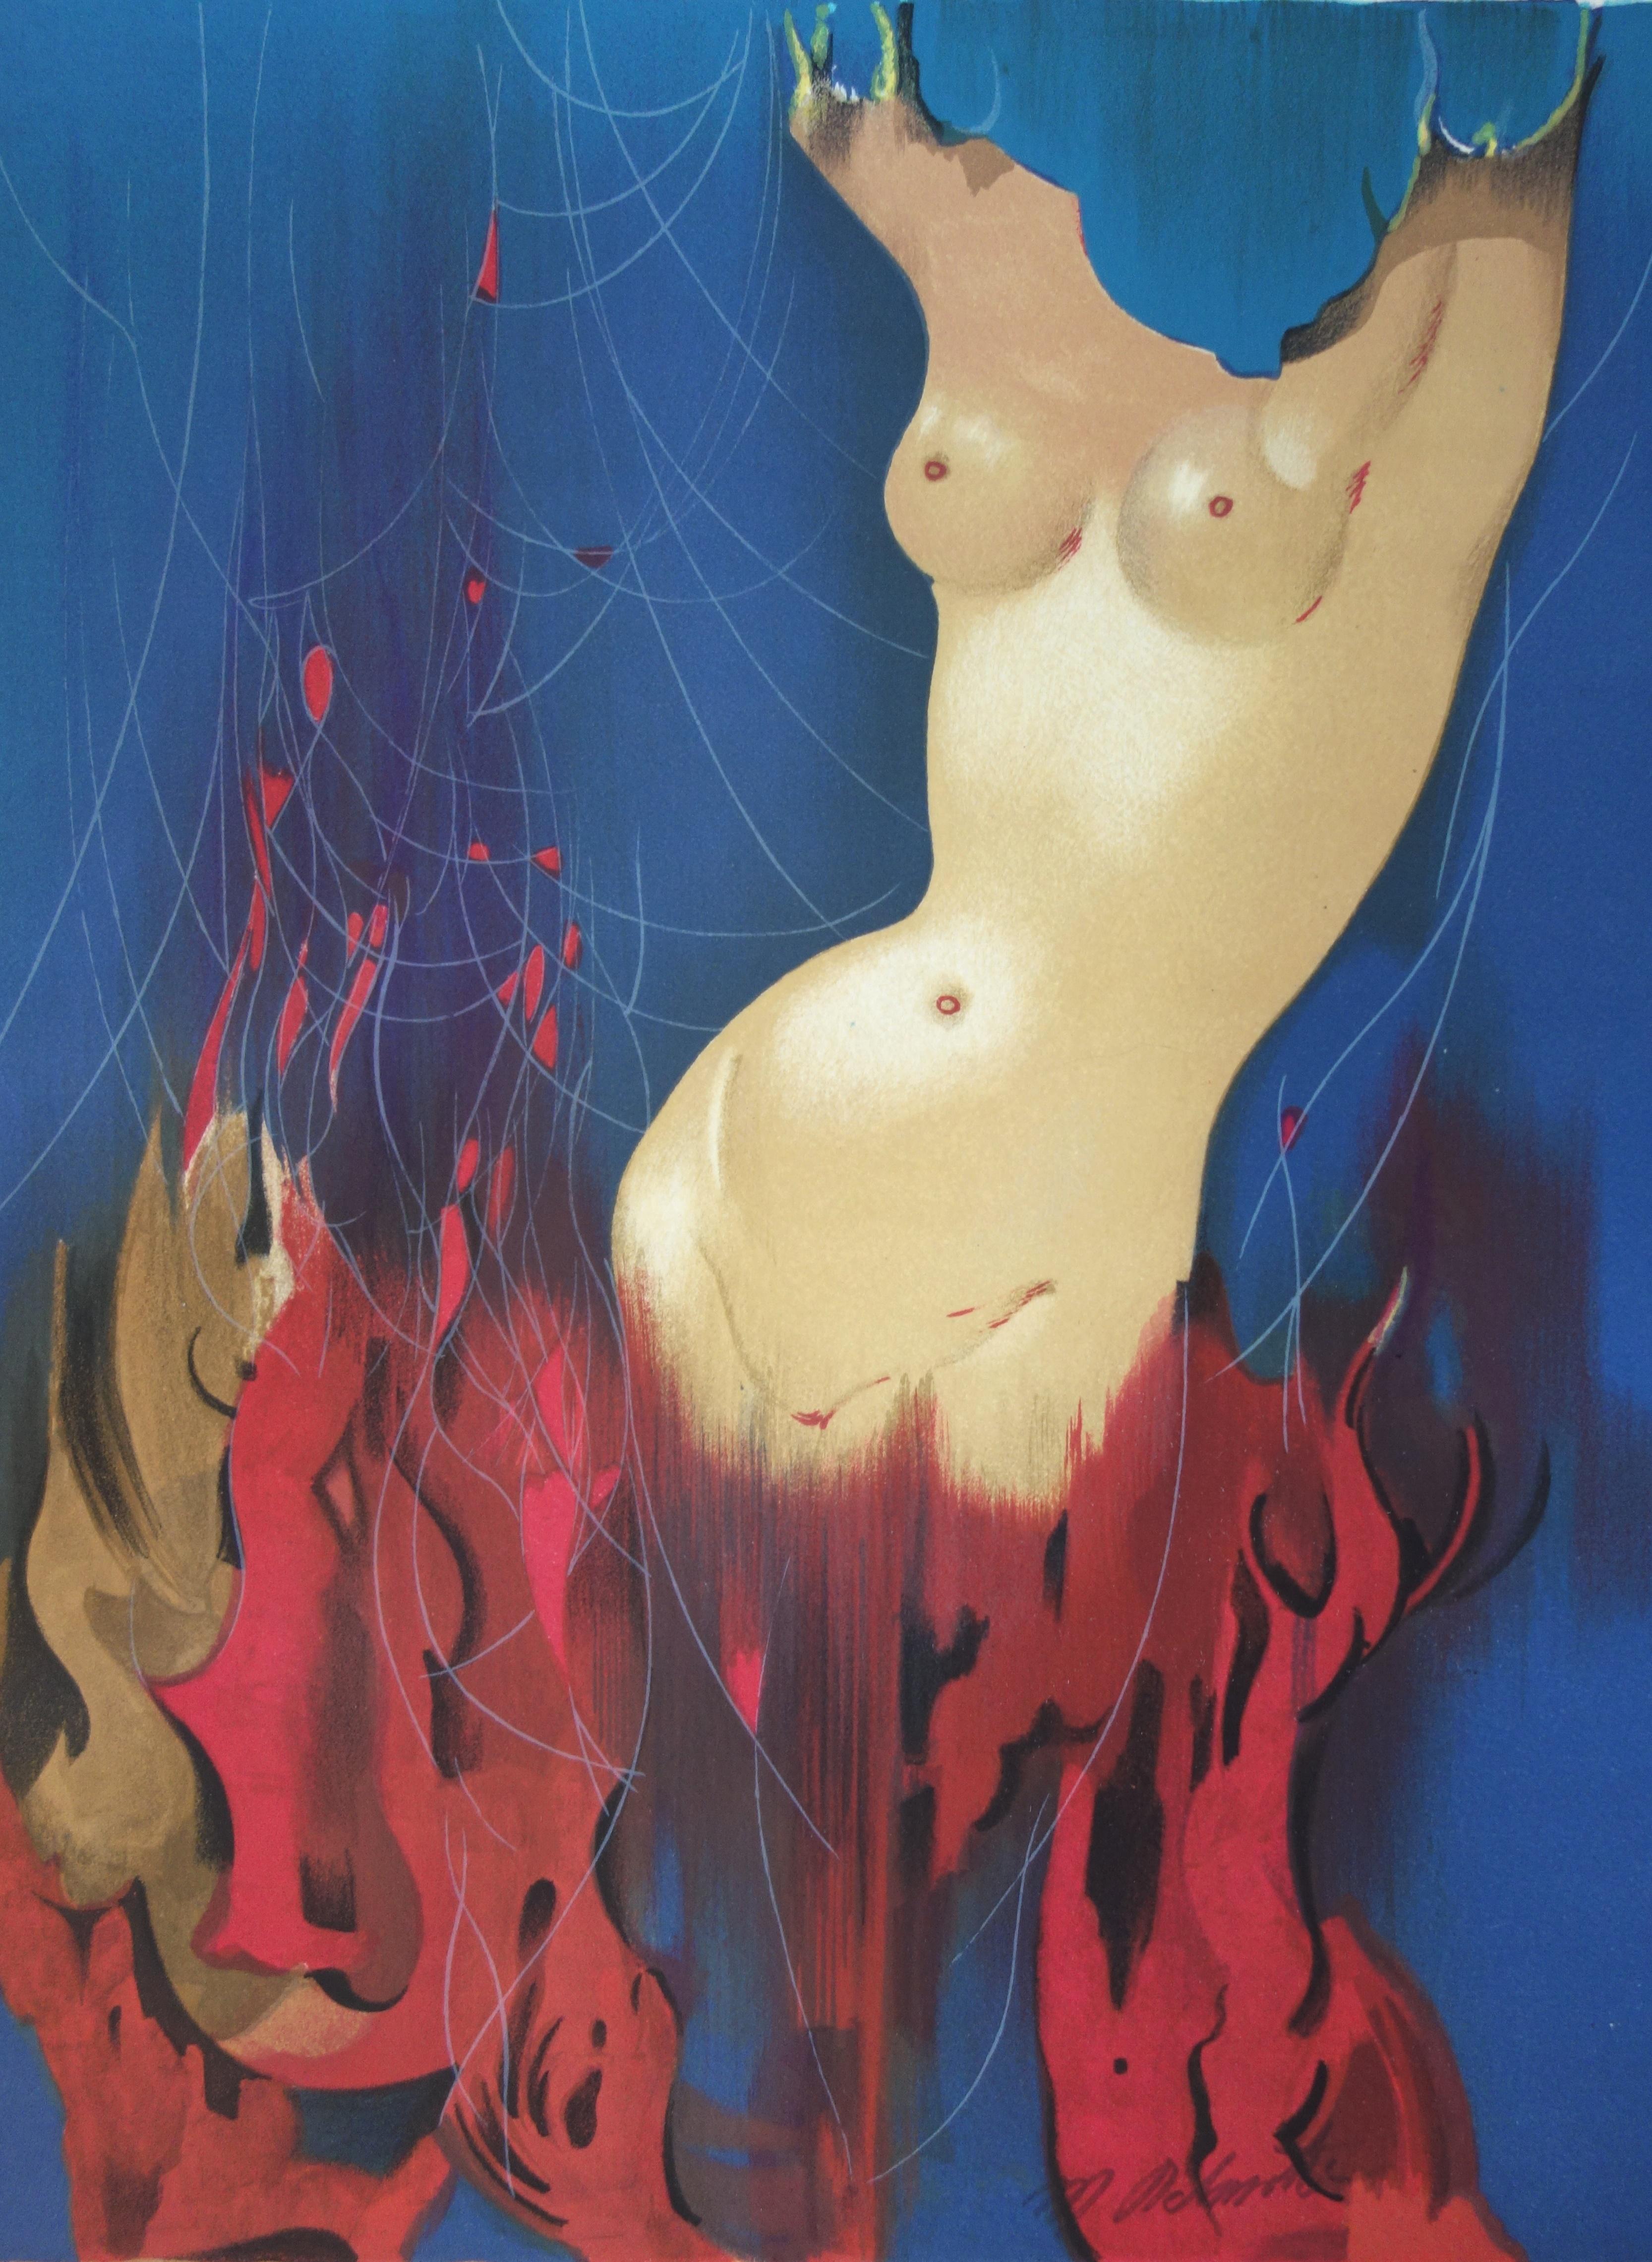 Marcel DELMOTTE Figurative Print - Woman in Fire - Original handsigned lithograph